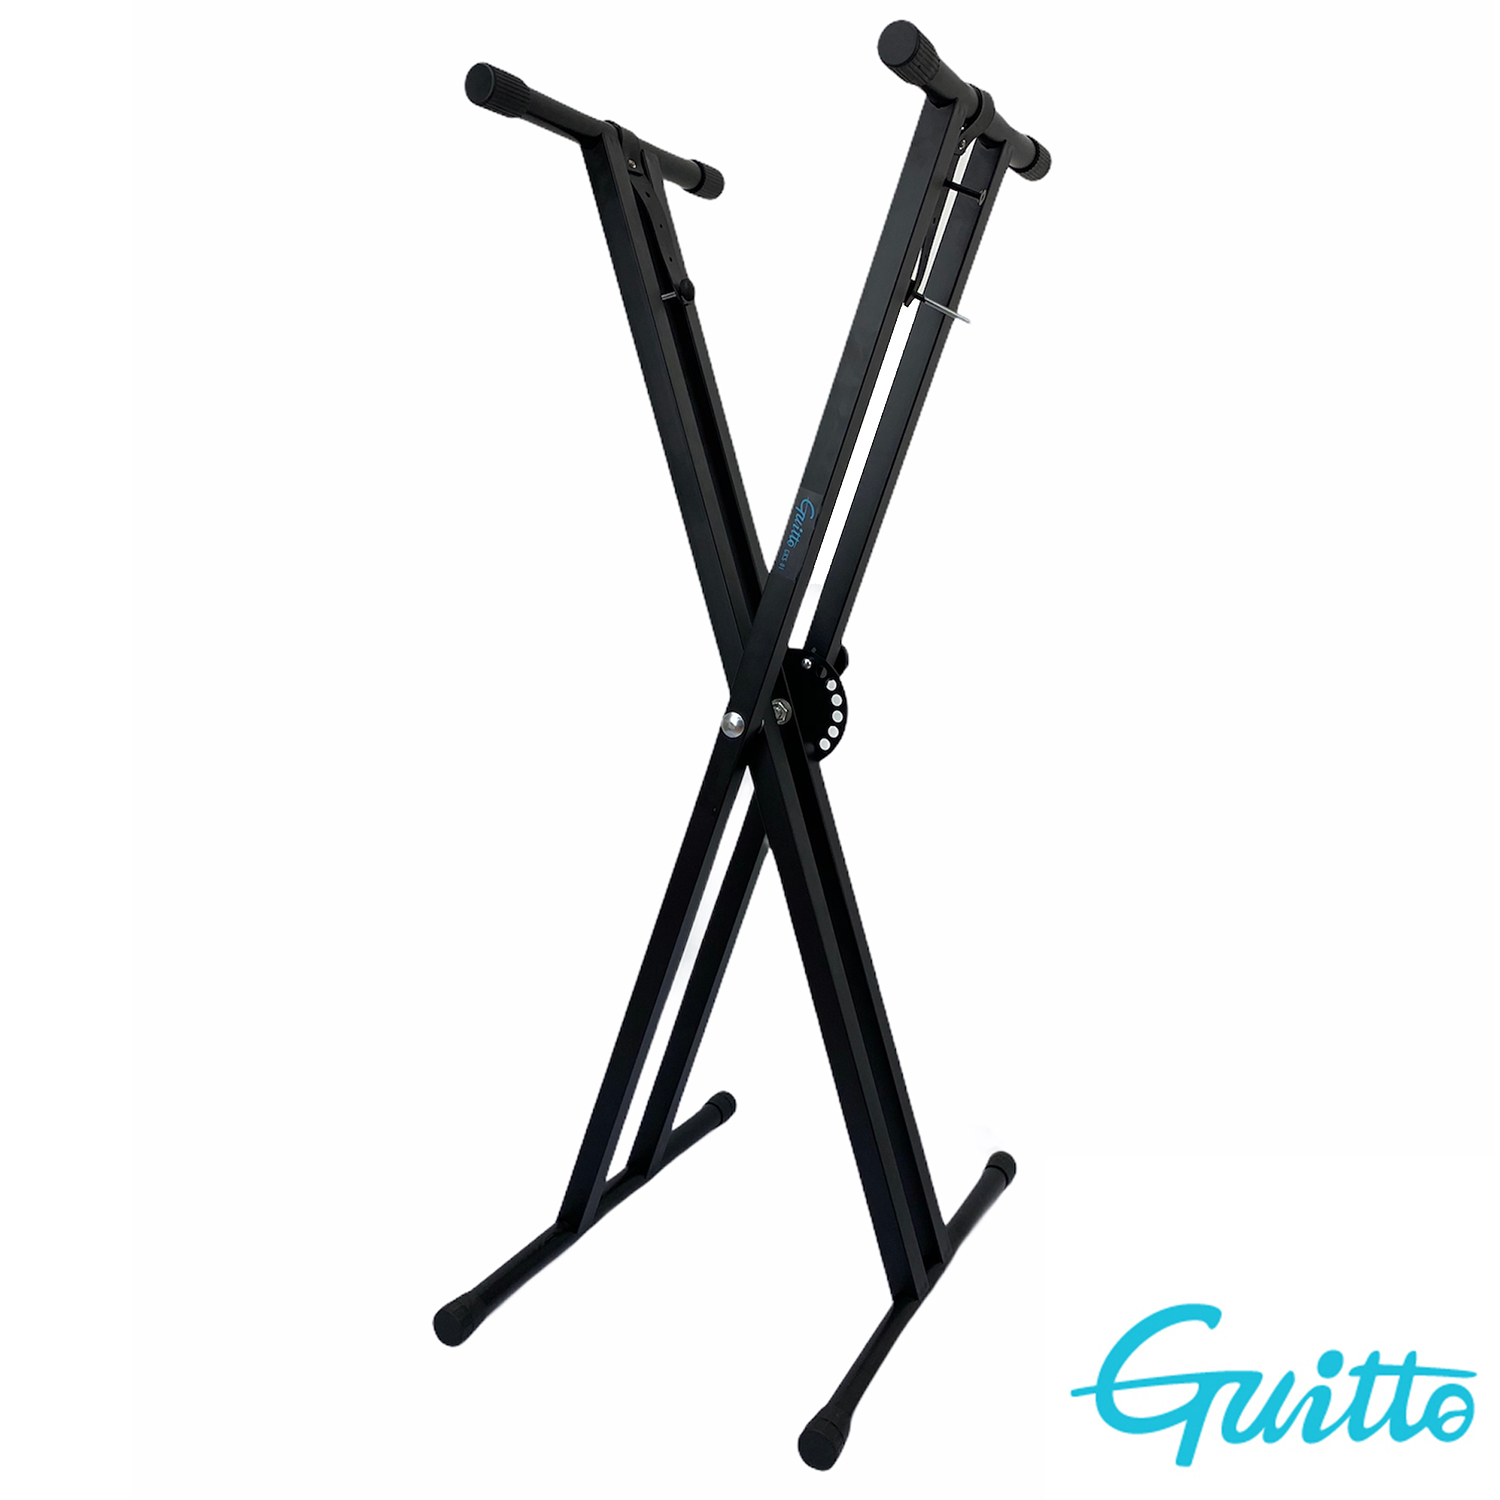 Guitto GKS-01 ขาตั้งคีย์บอร์ด แบบตัว X โลหะ ขาคู่ อย่างดี ปรับได้ 7 ระดับ ตั้งแต่ 45-99 ซม. (Double Brace Keyboard Stand)